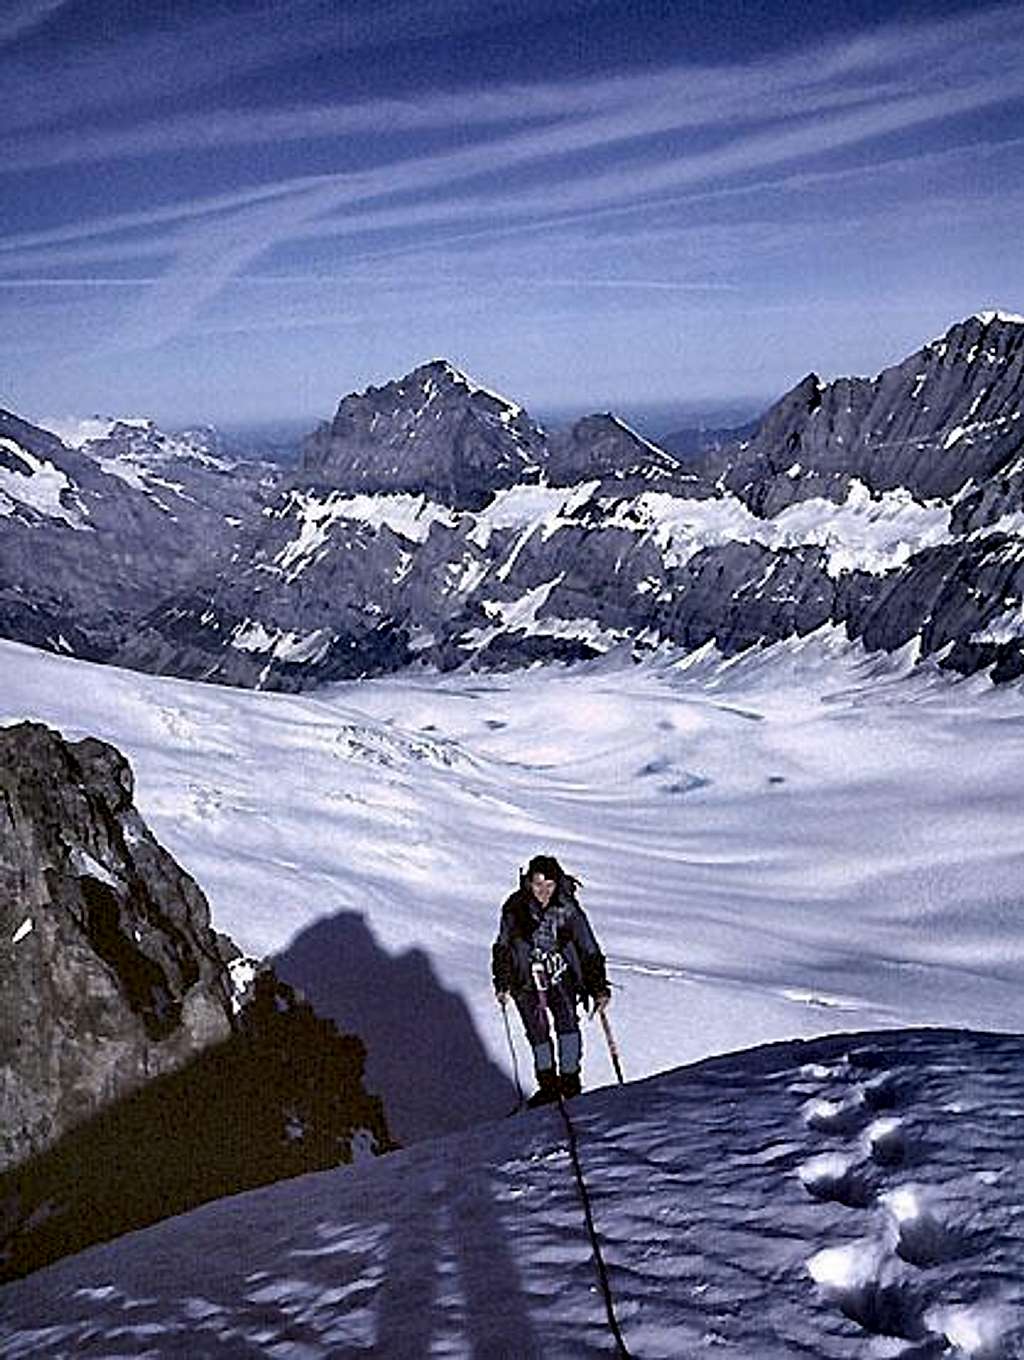 The last few steps to the summit of Tschingelhorn